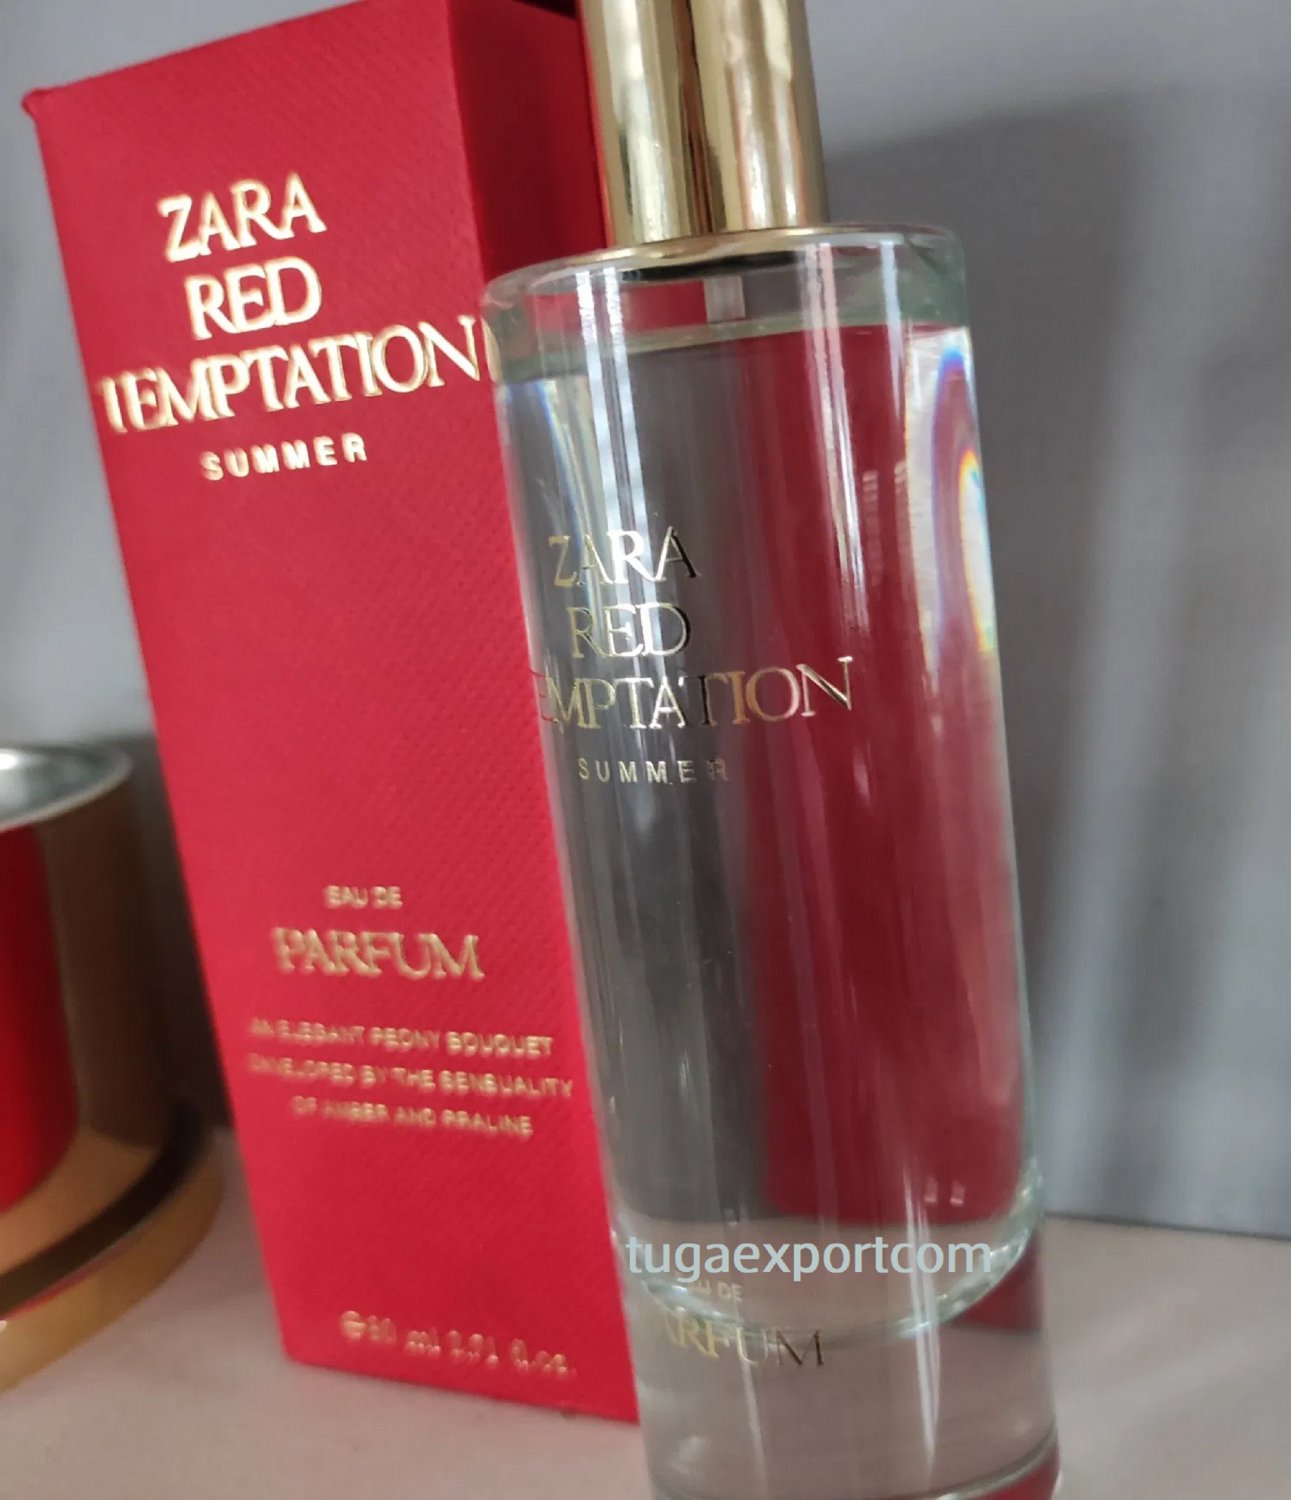 Zara Red Temptation Summer 2.71 Oz (80 Ml) Eau De Parfum Edp Spray New & Sealed